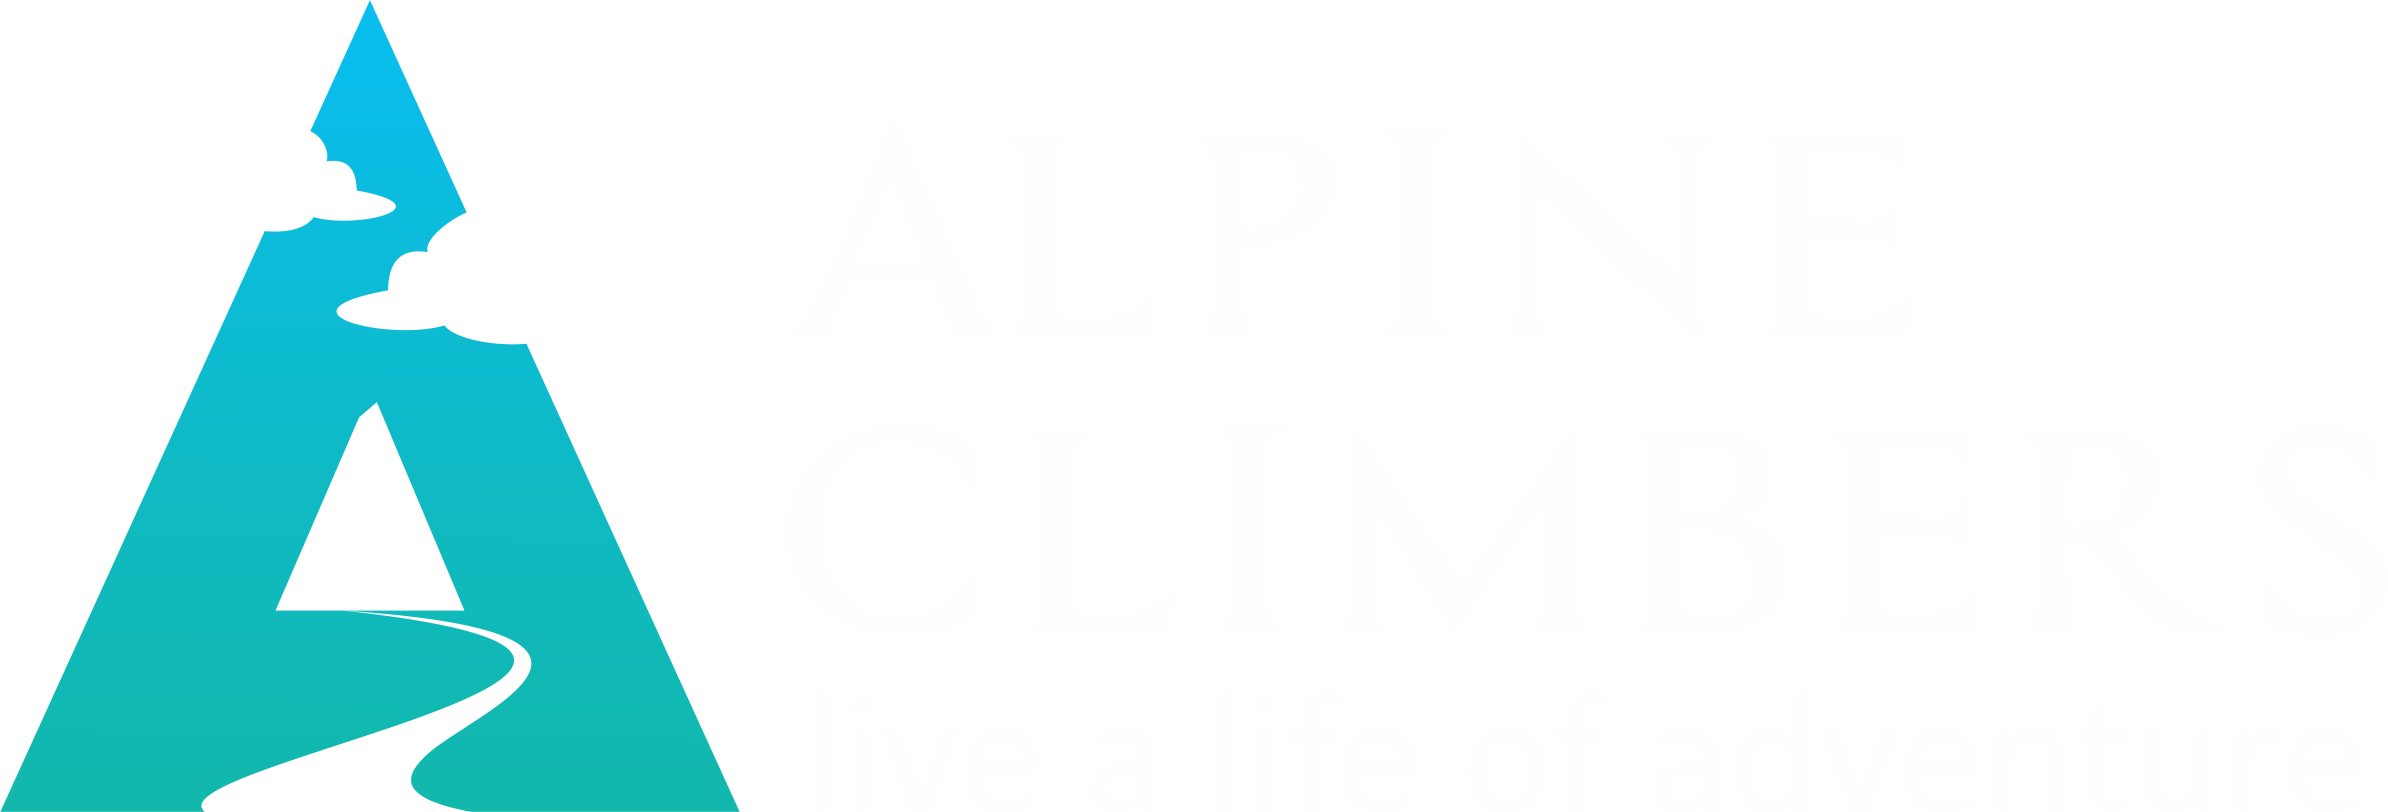 Alpine Climbers